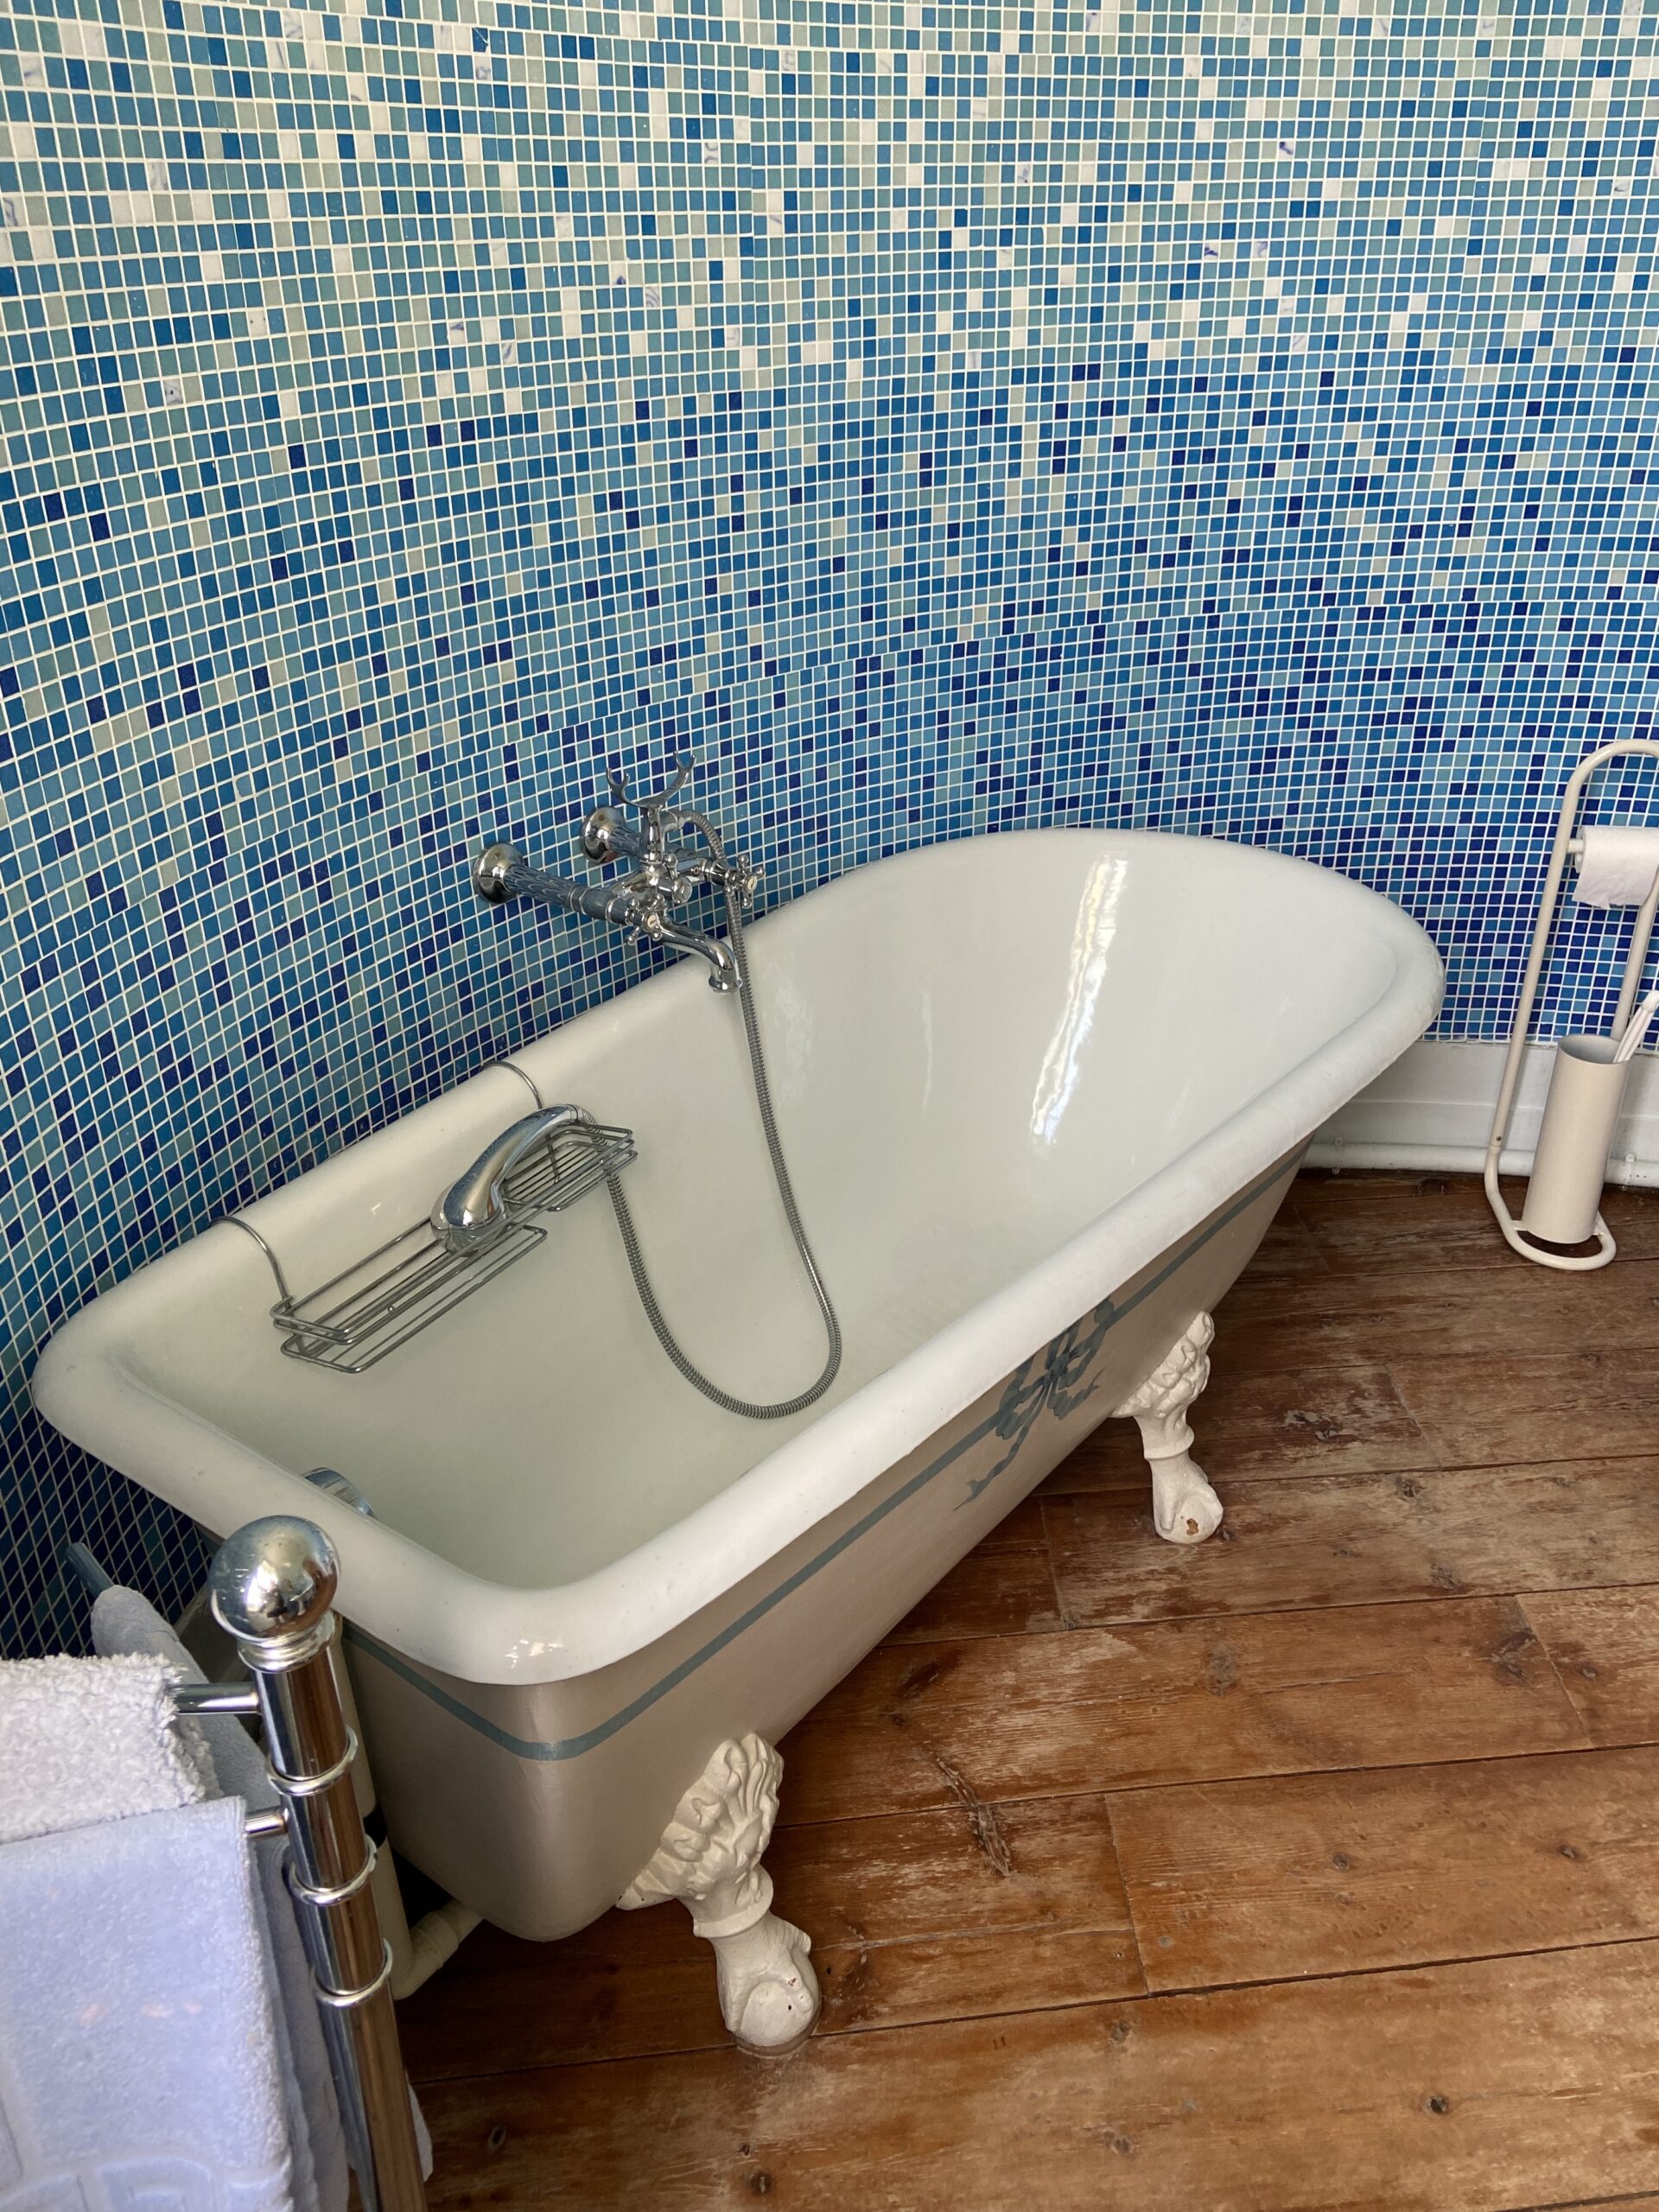 Bed & Breakfast blue tile bathroom with tub